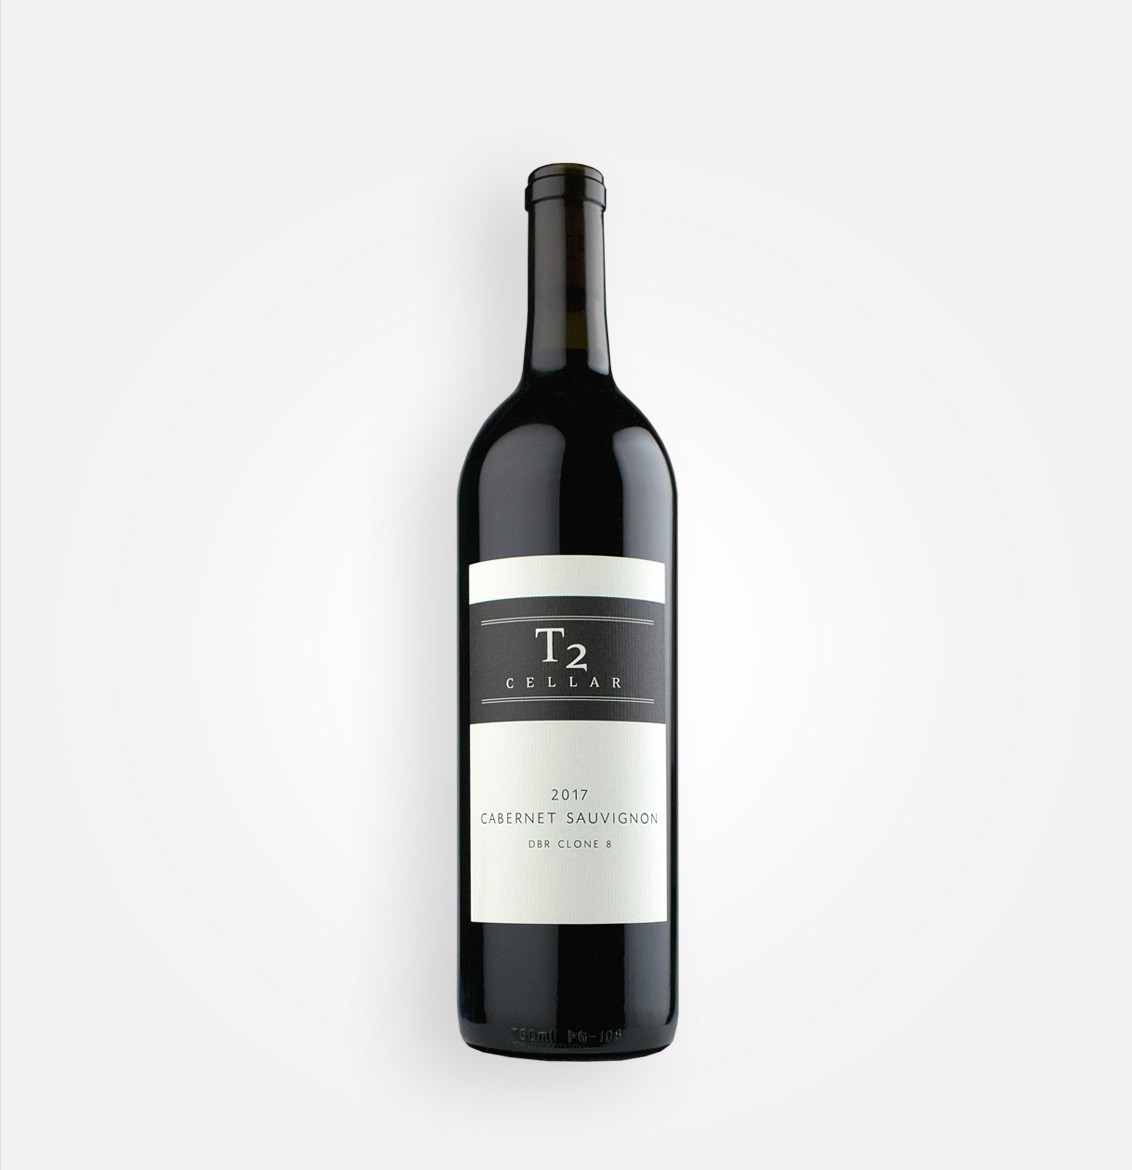 Bottle of T2 Cellar 2017 Cabernet Sauvignon DBR Clone 8 wine from Washington's Rattlesnake Hills